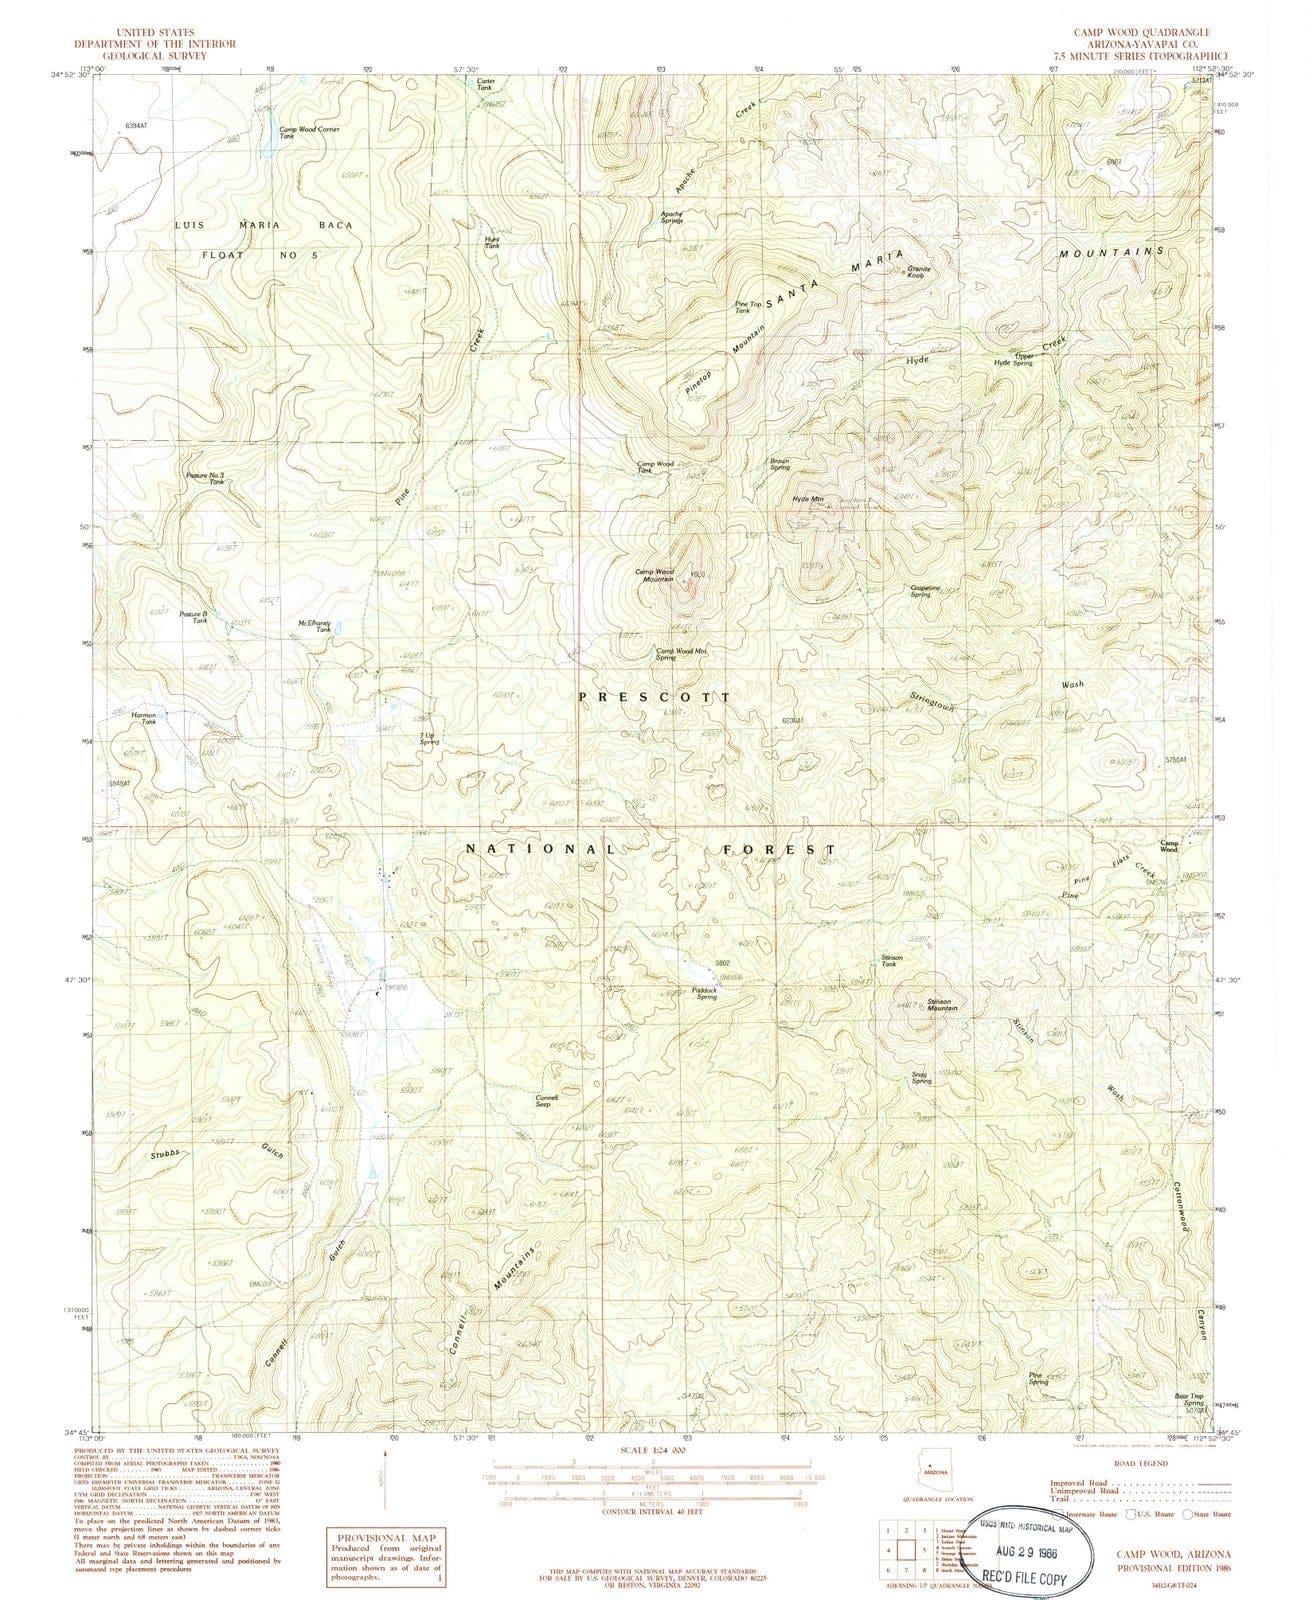 1986 Camp Wood, AZ - Arizona - USGS Topographic Map